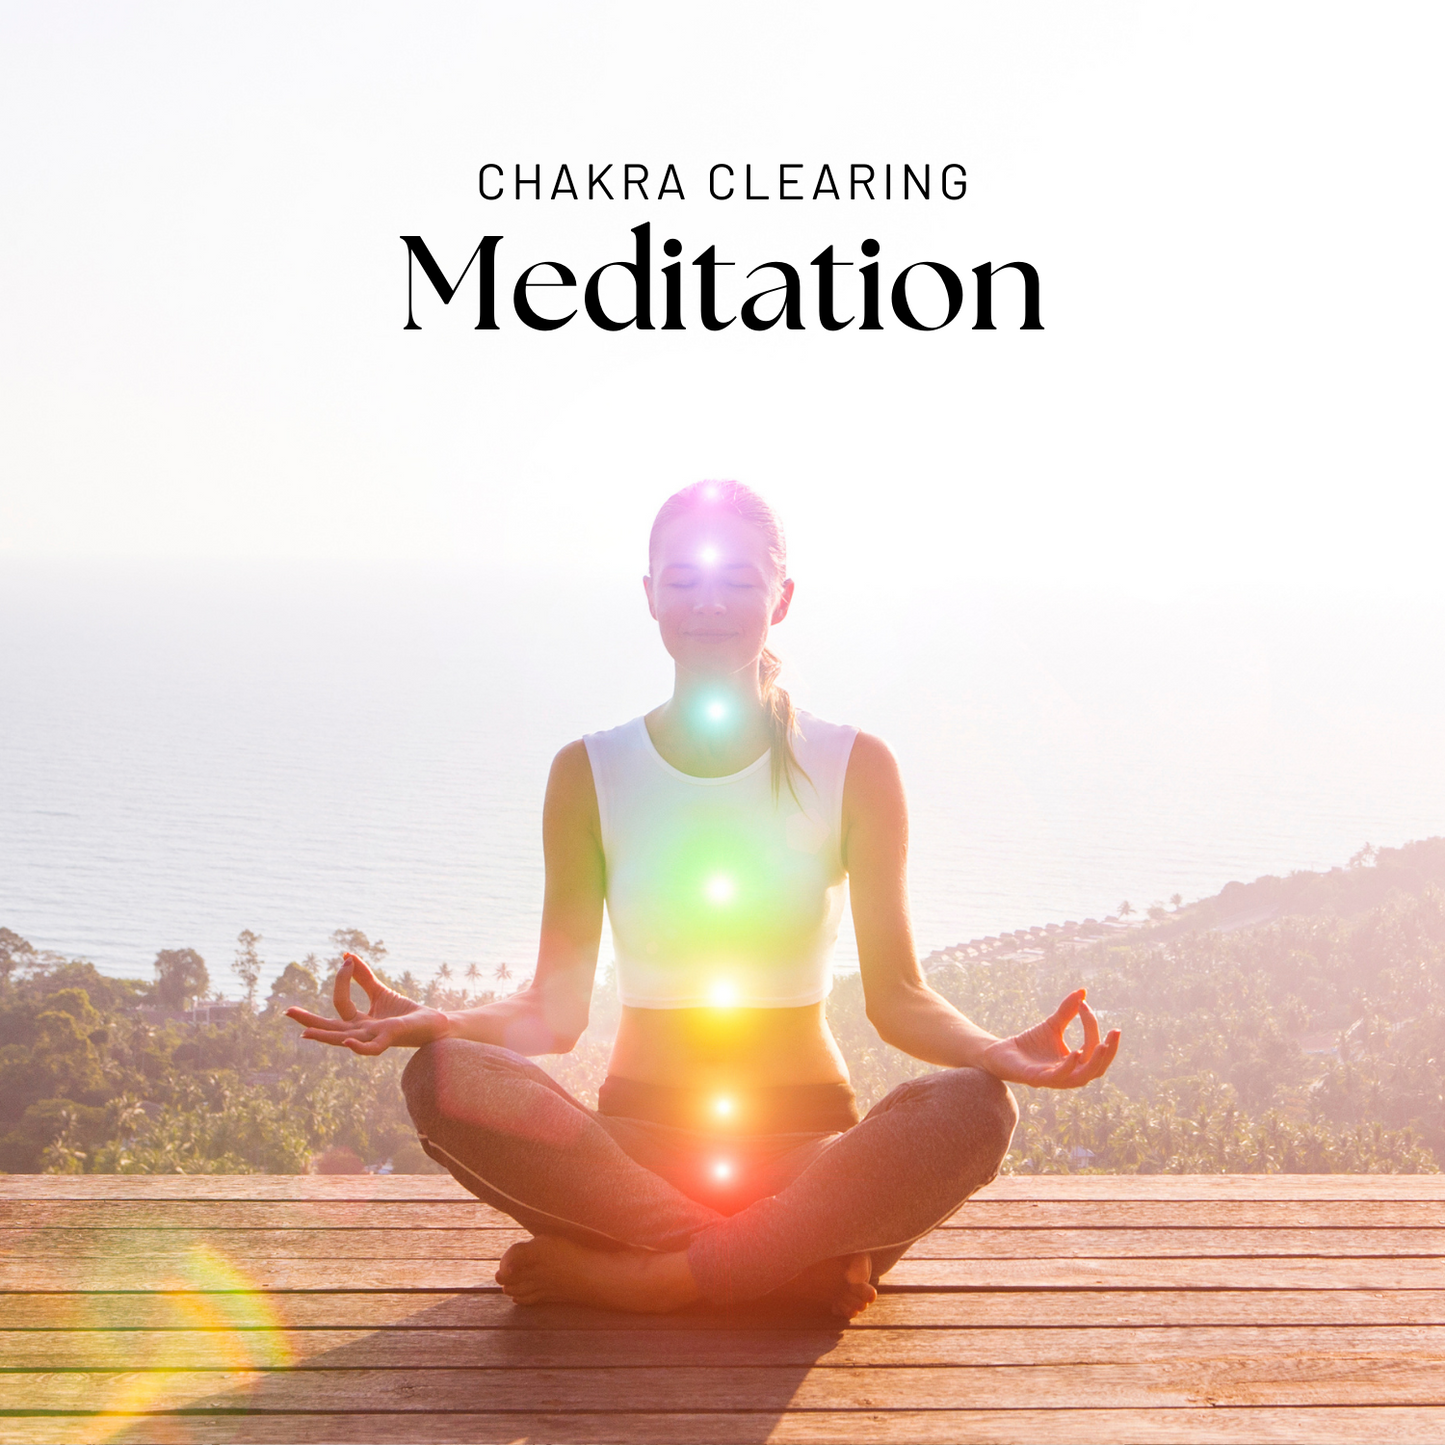 Chakra Clearing Meditation by Kristen Hunt